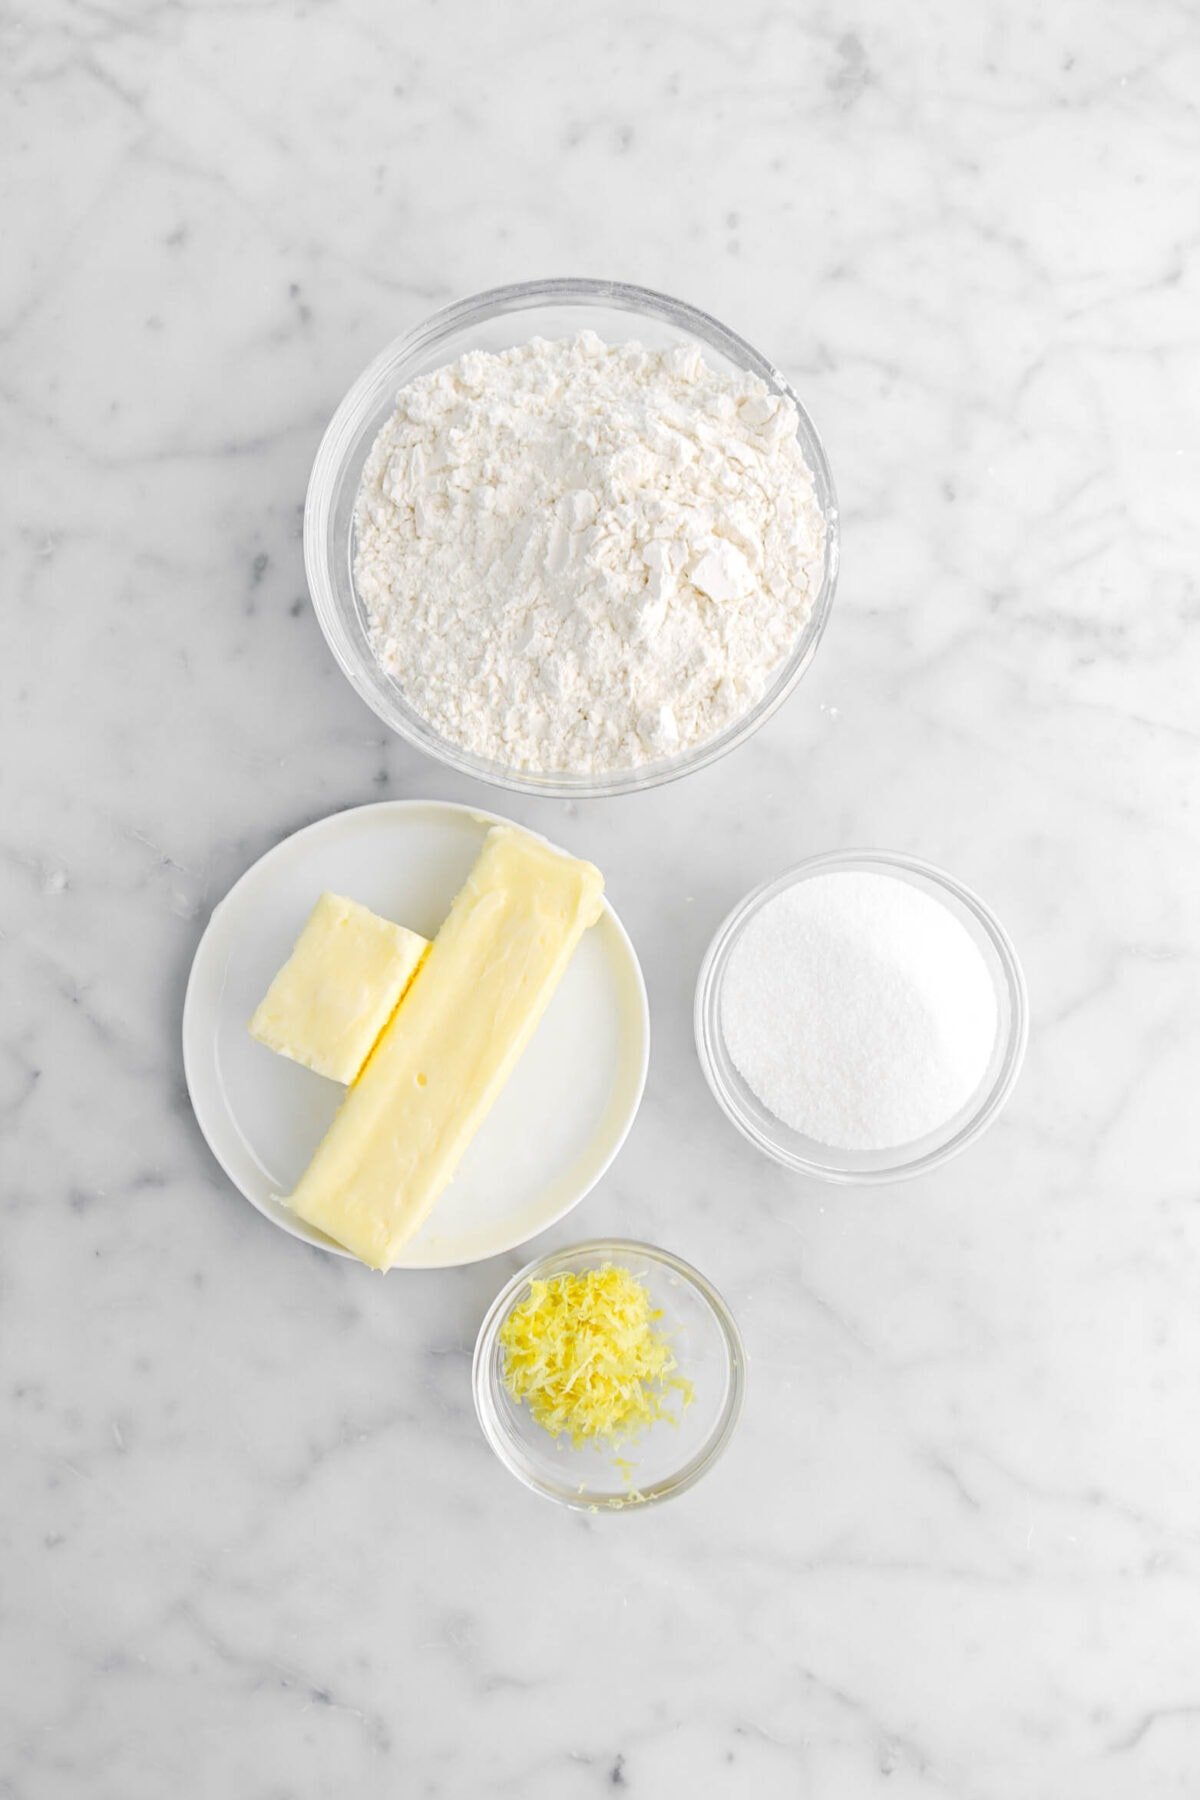 flour, sugar, butter, and lemon zest on marble surface.